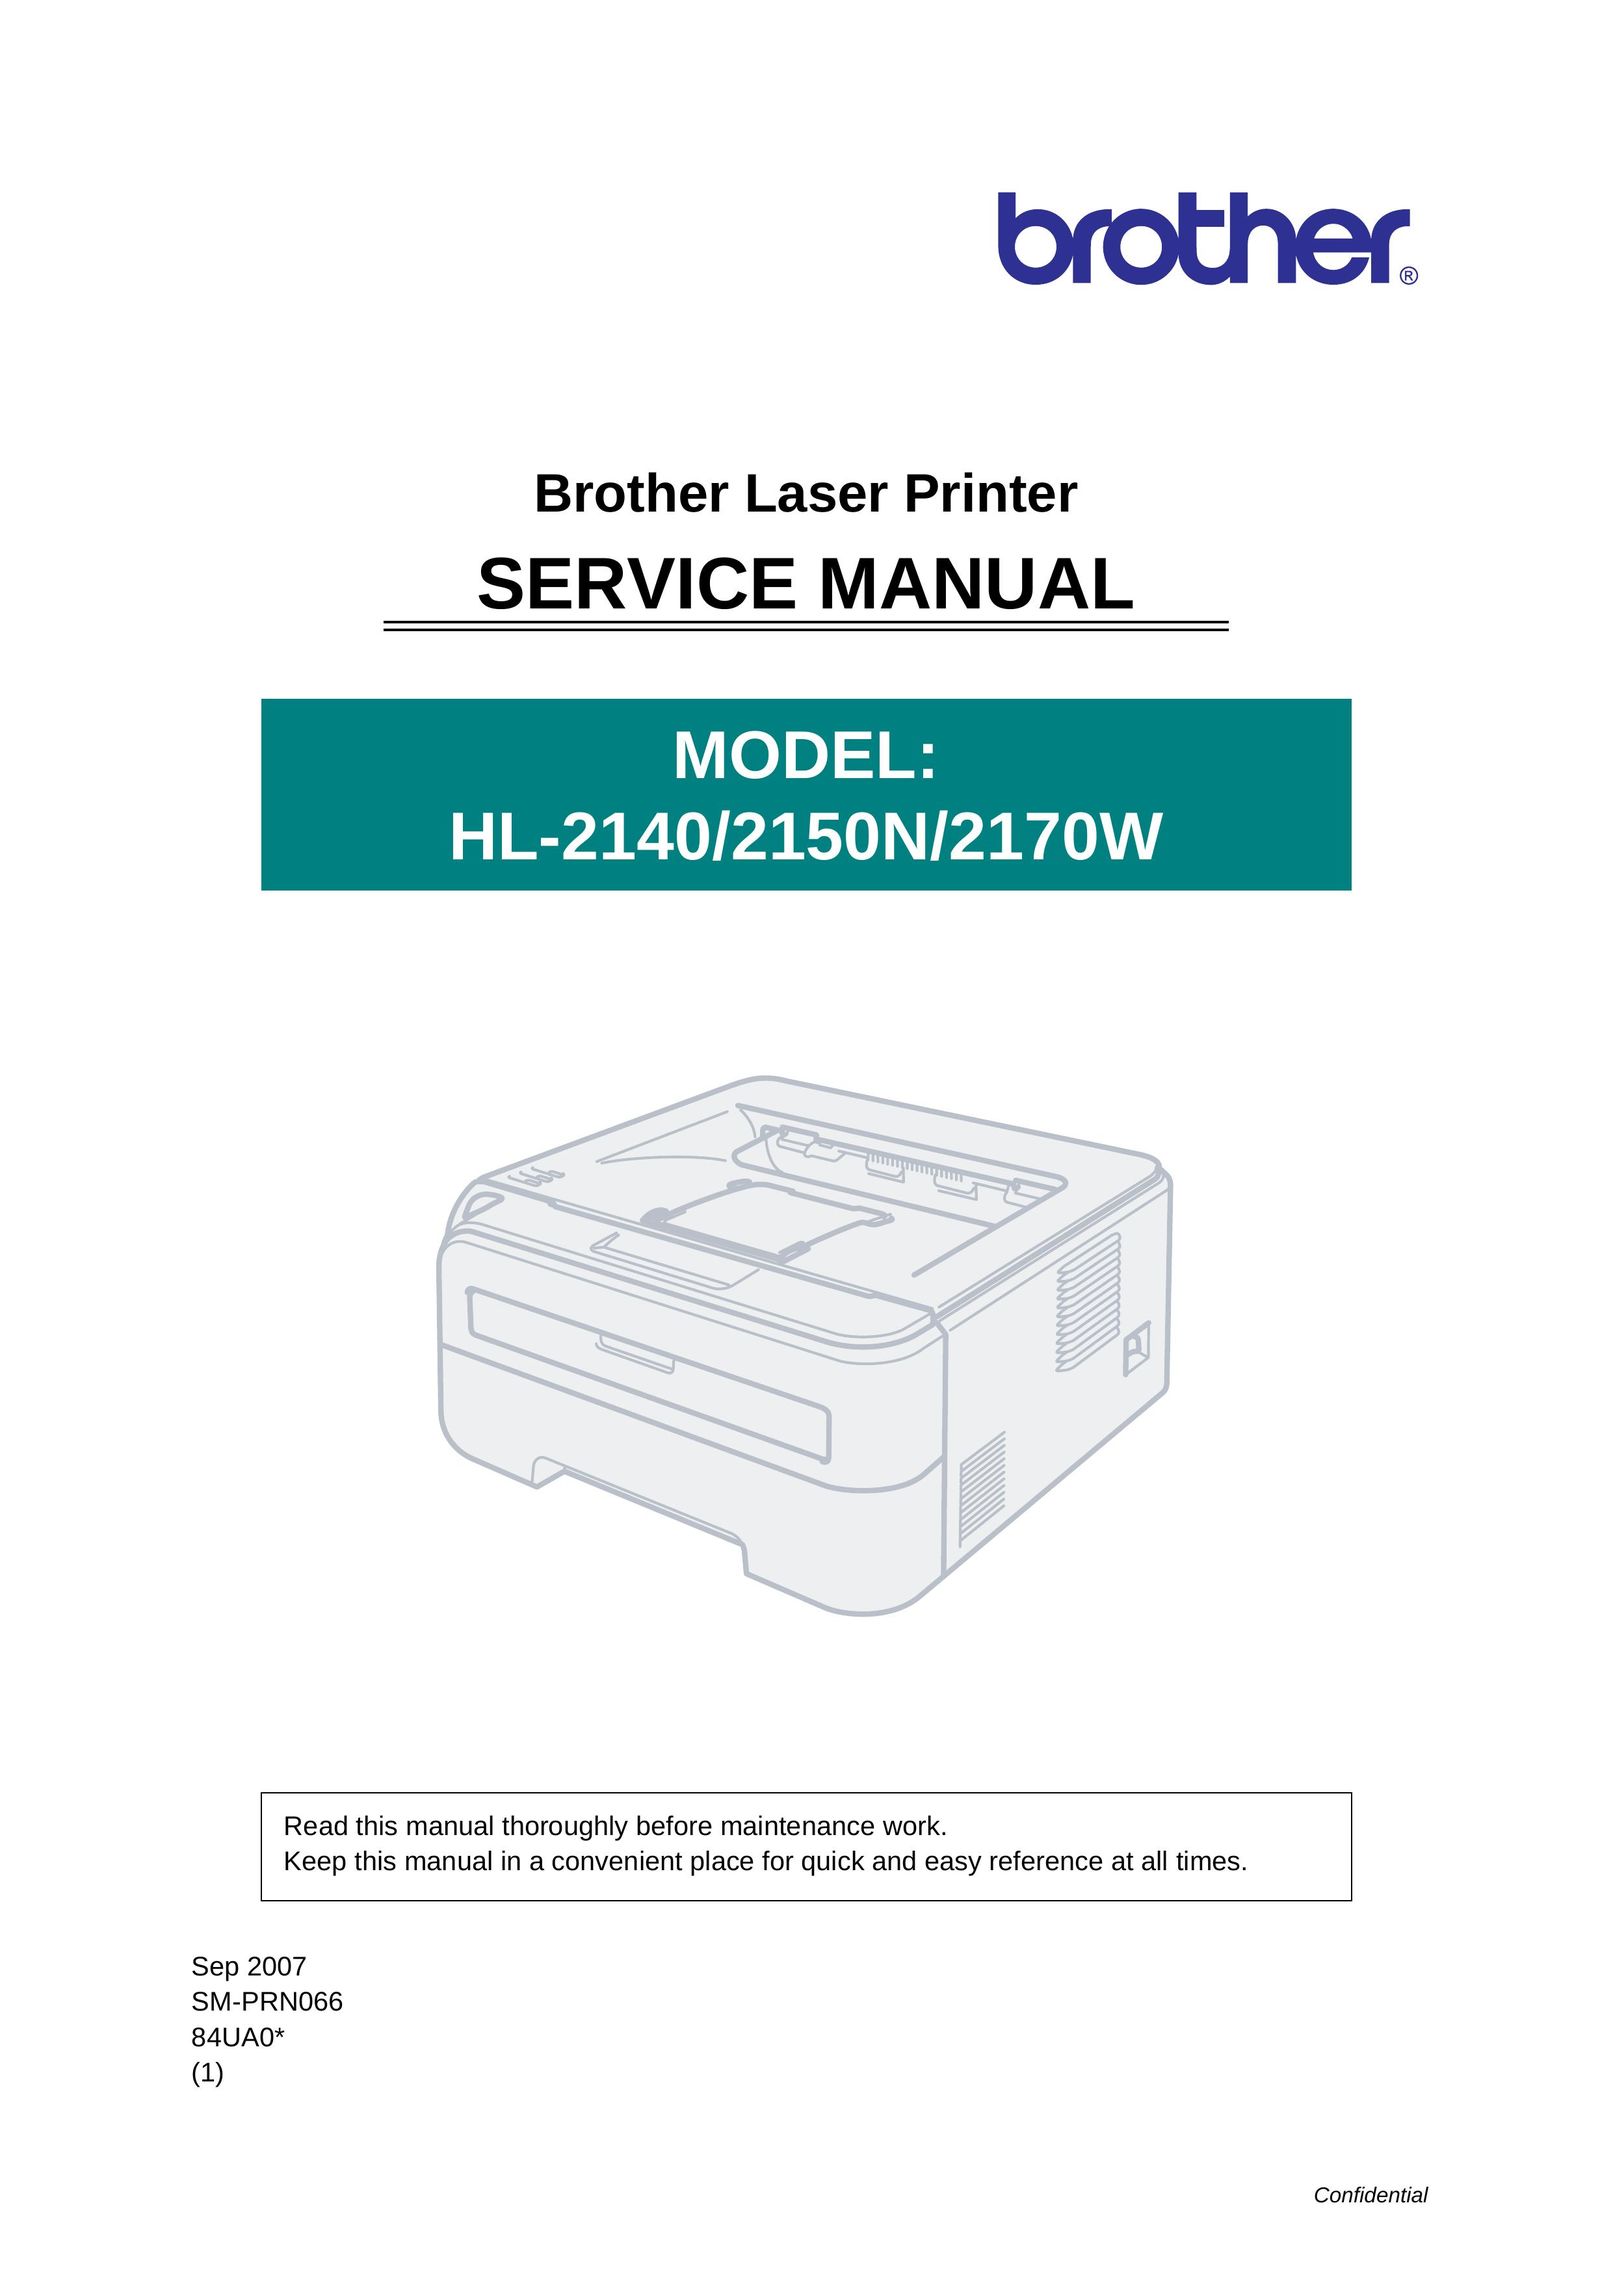 Brother 2170W Printer User Manual